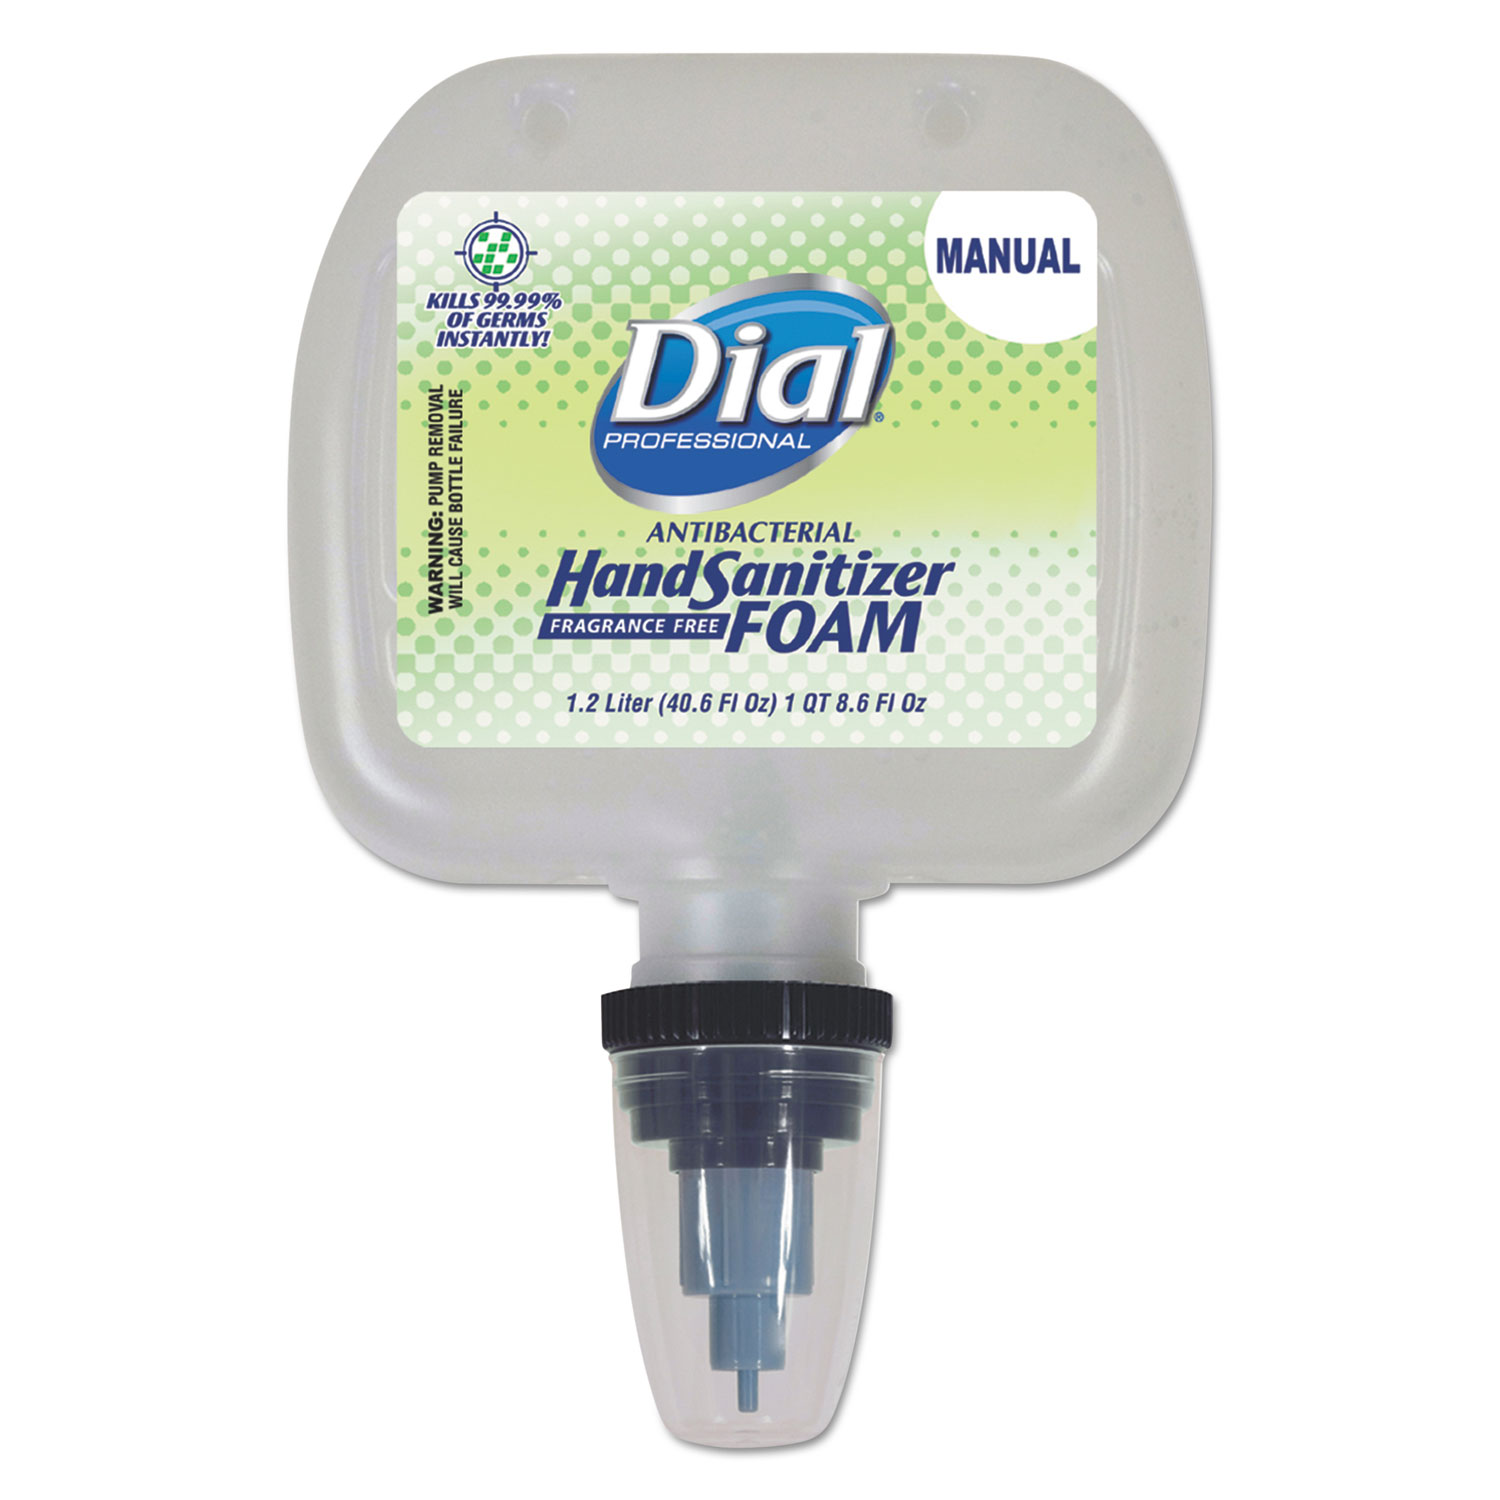  Dial Professional 1700005085 Antibacterial Foaming Hand Sanitizer, 1.2 L Refill, Fragrance-Free (DIA05085) 